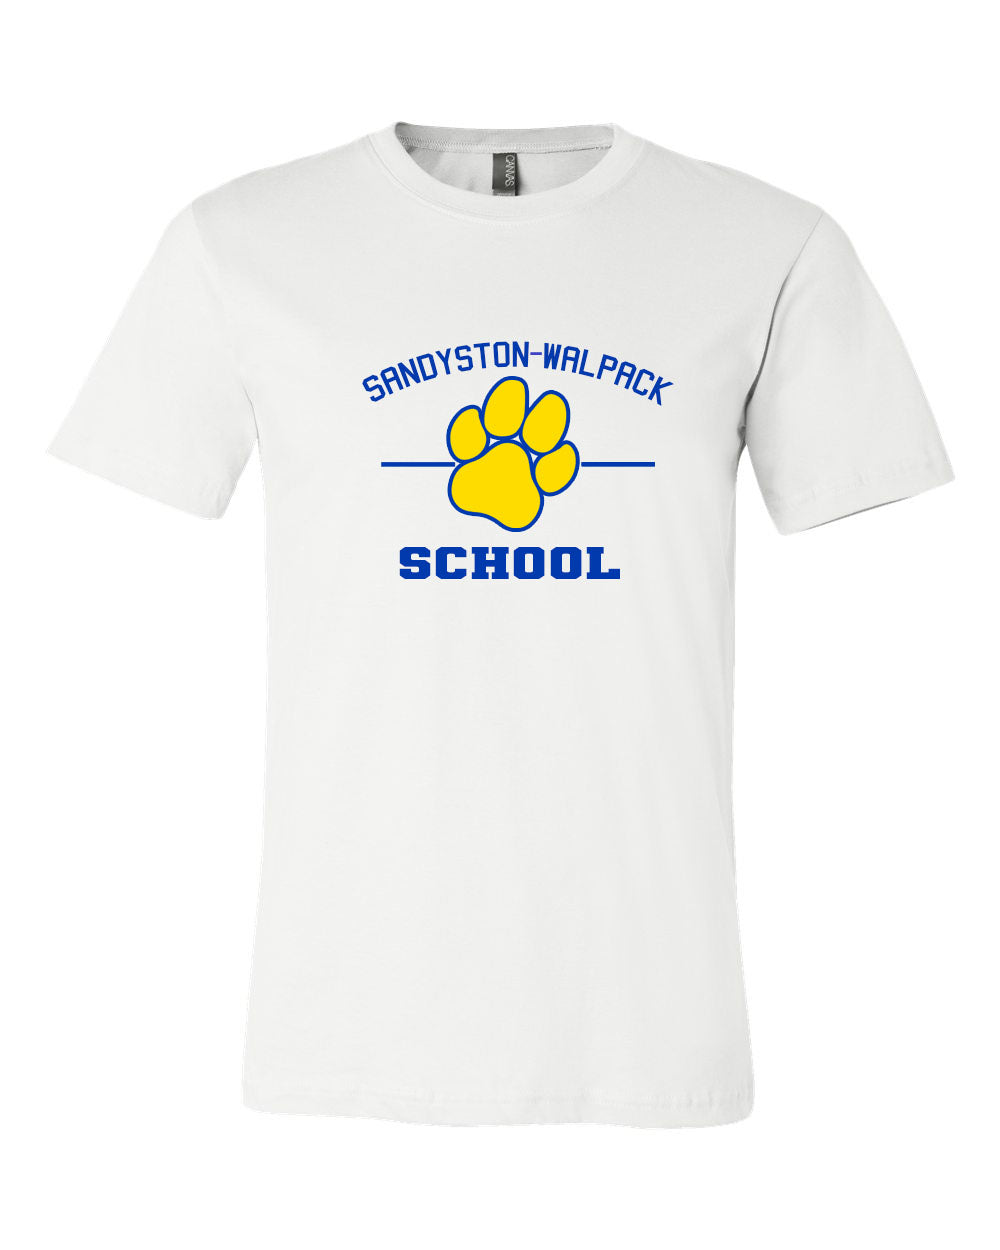 Sandyston Walpack Design 4 T-Shirt